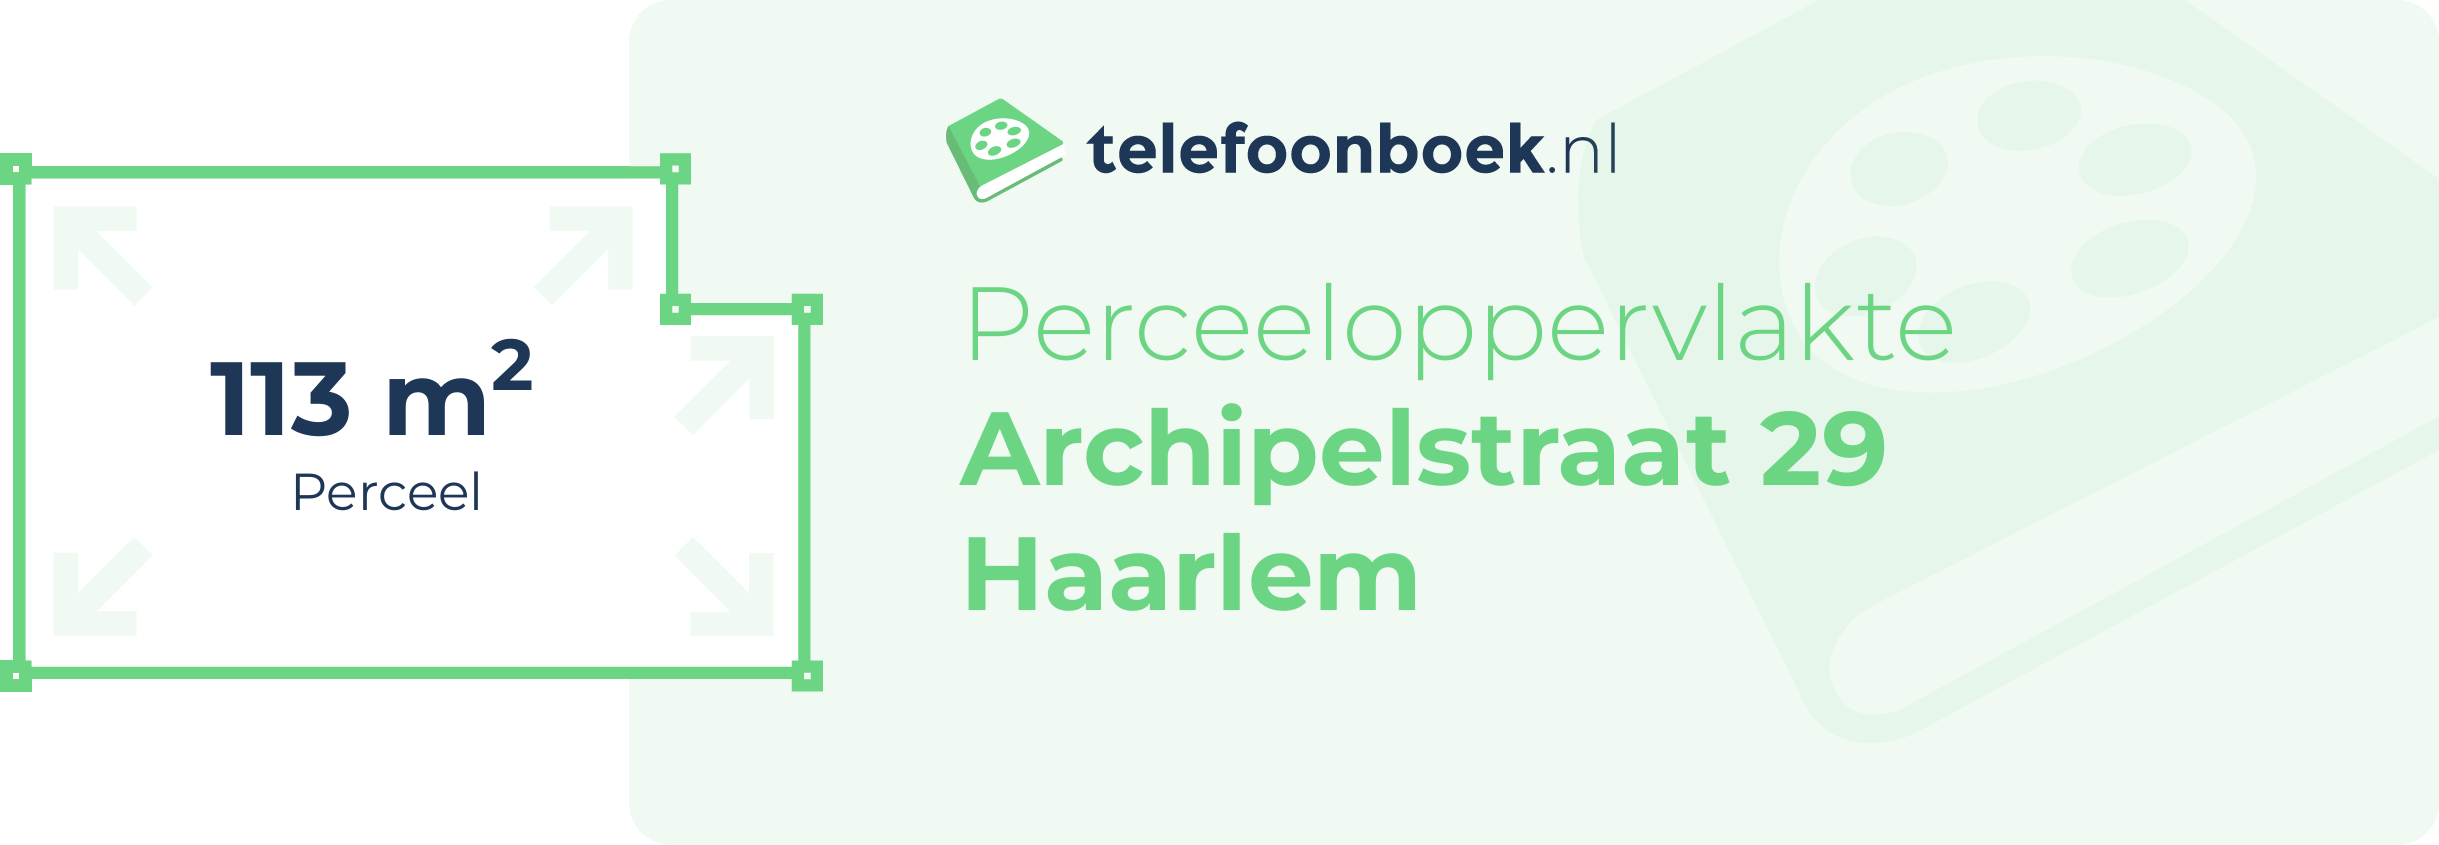 Perceeloppervlakte Archipelstraat 29 Haarlem